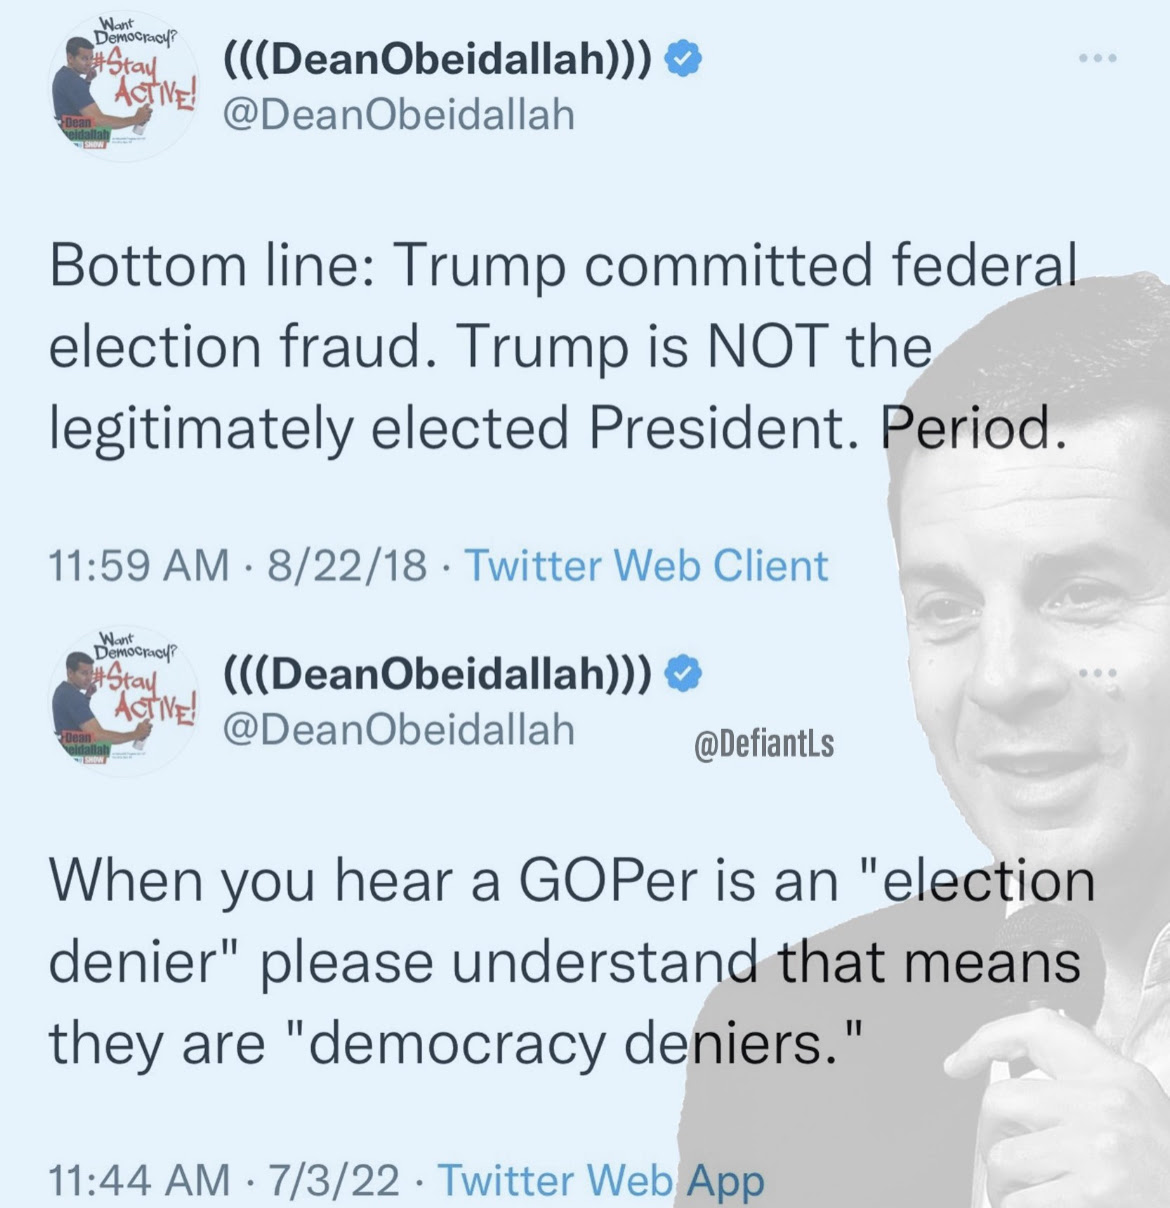 Hypocrite Dean Obeidallah denies Trump election but condmns those who deny Biden election.